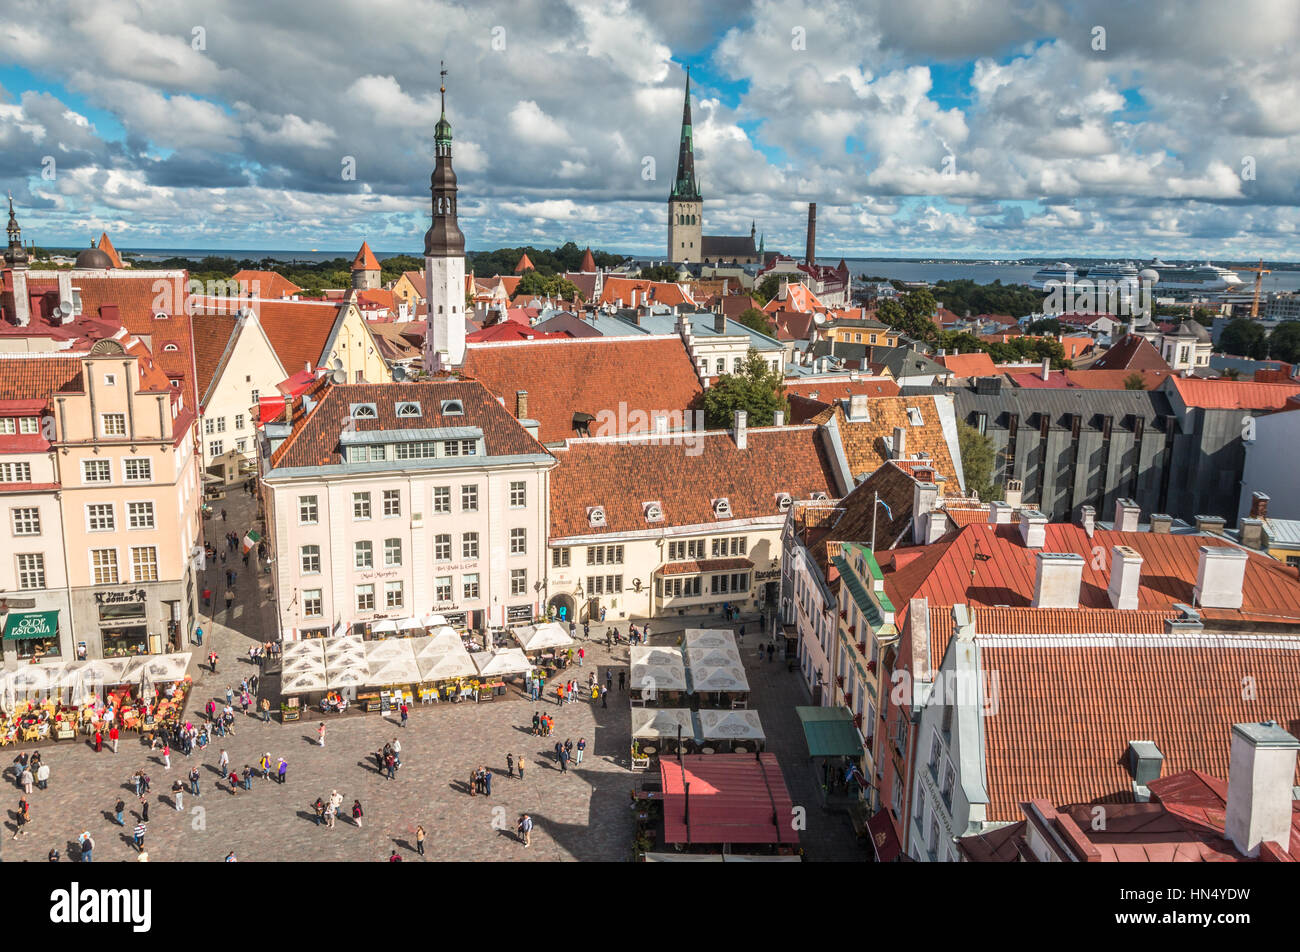 Nice view of Tallinn Estonia Stock Photo